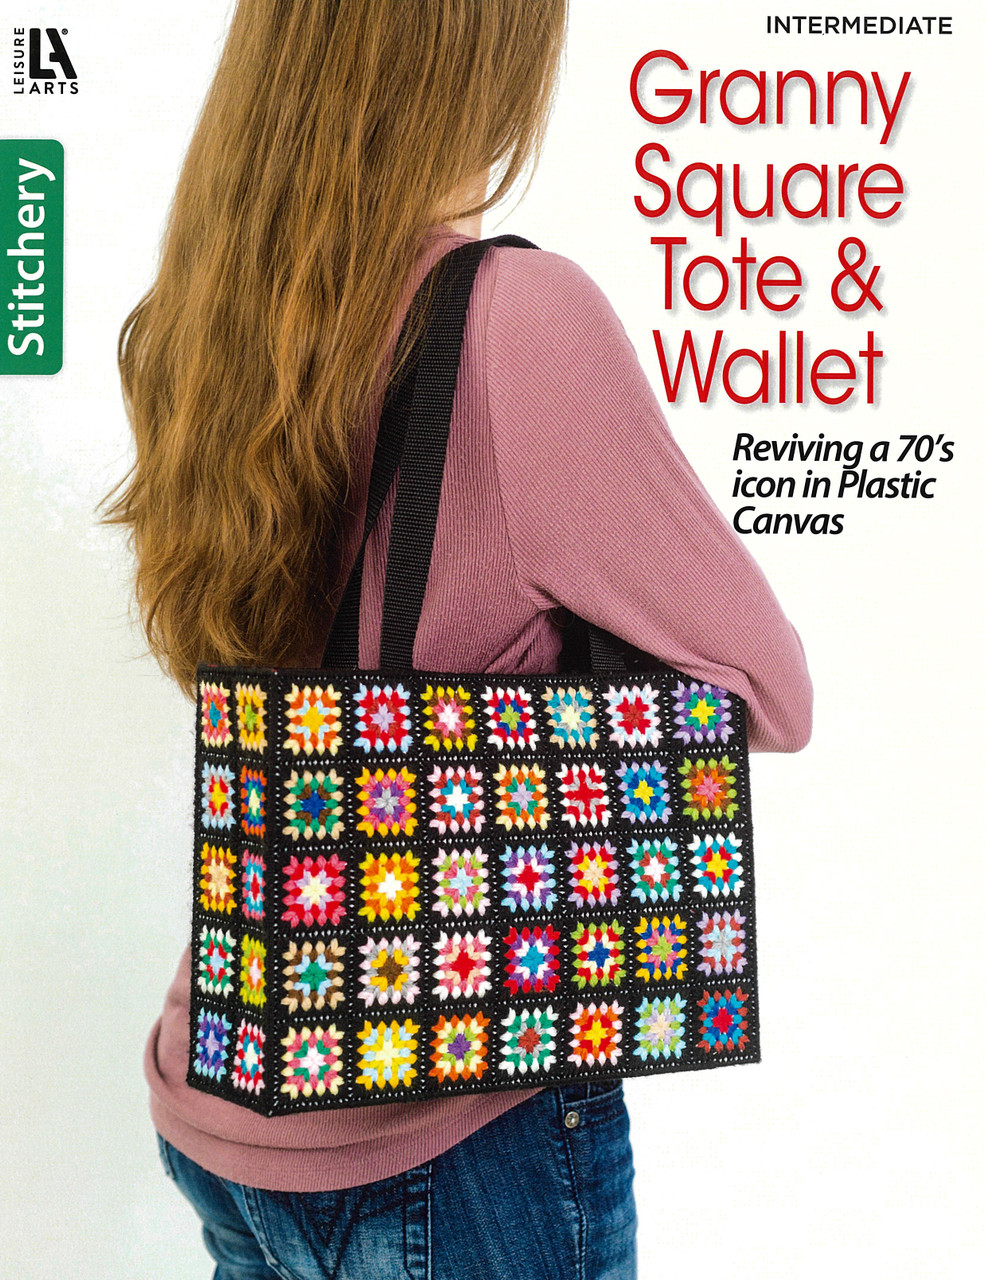  Portable Square Cross Stitch Starter Kits Bag